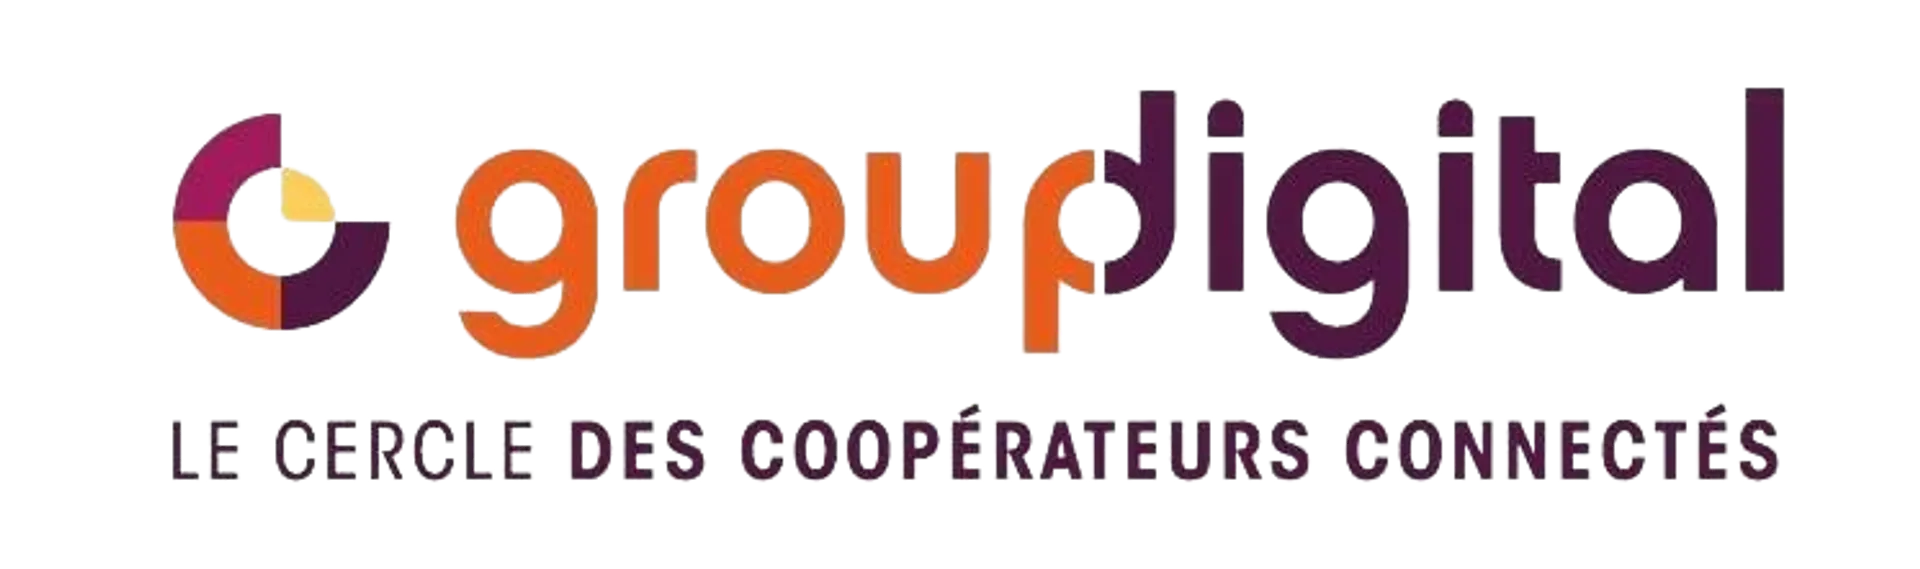 GROUP DIGITAL logo du catalogue